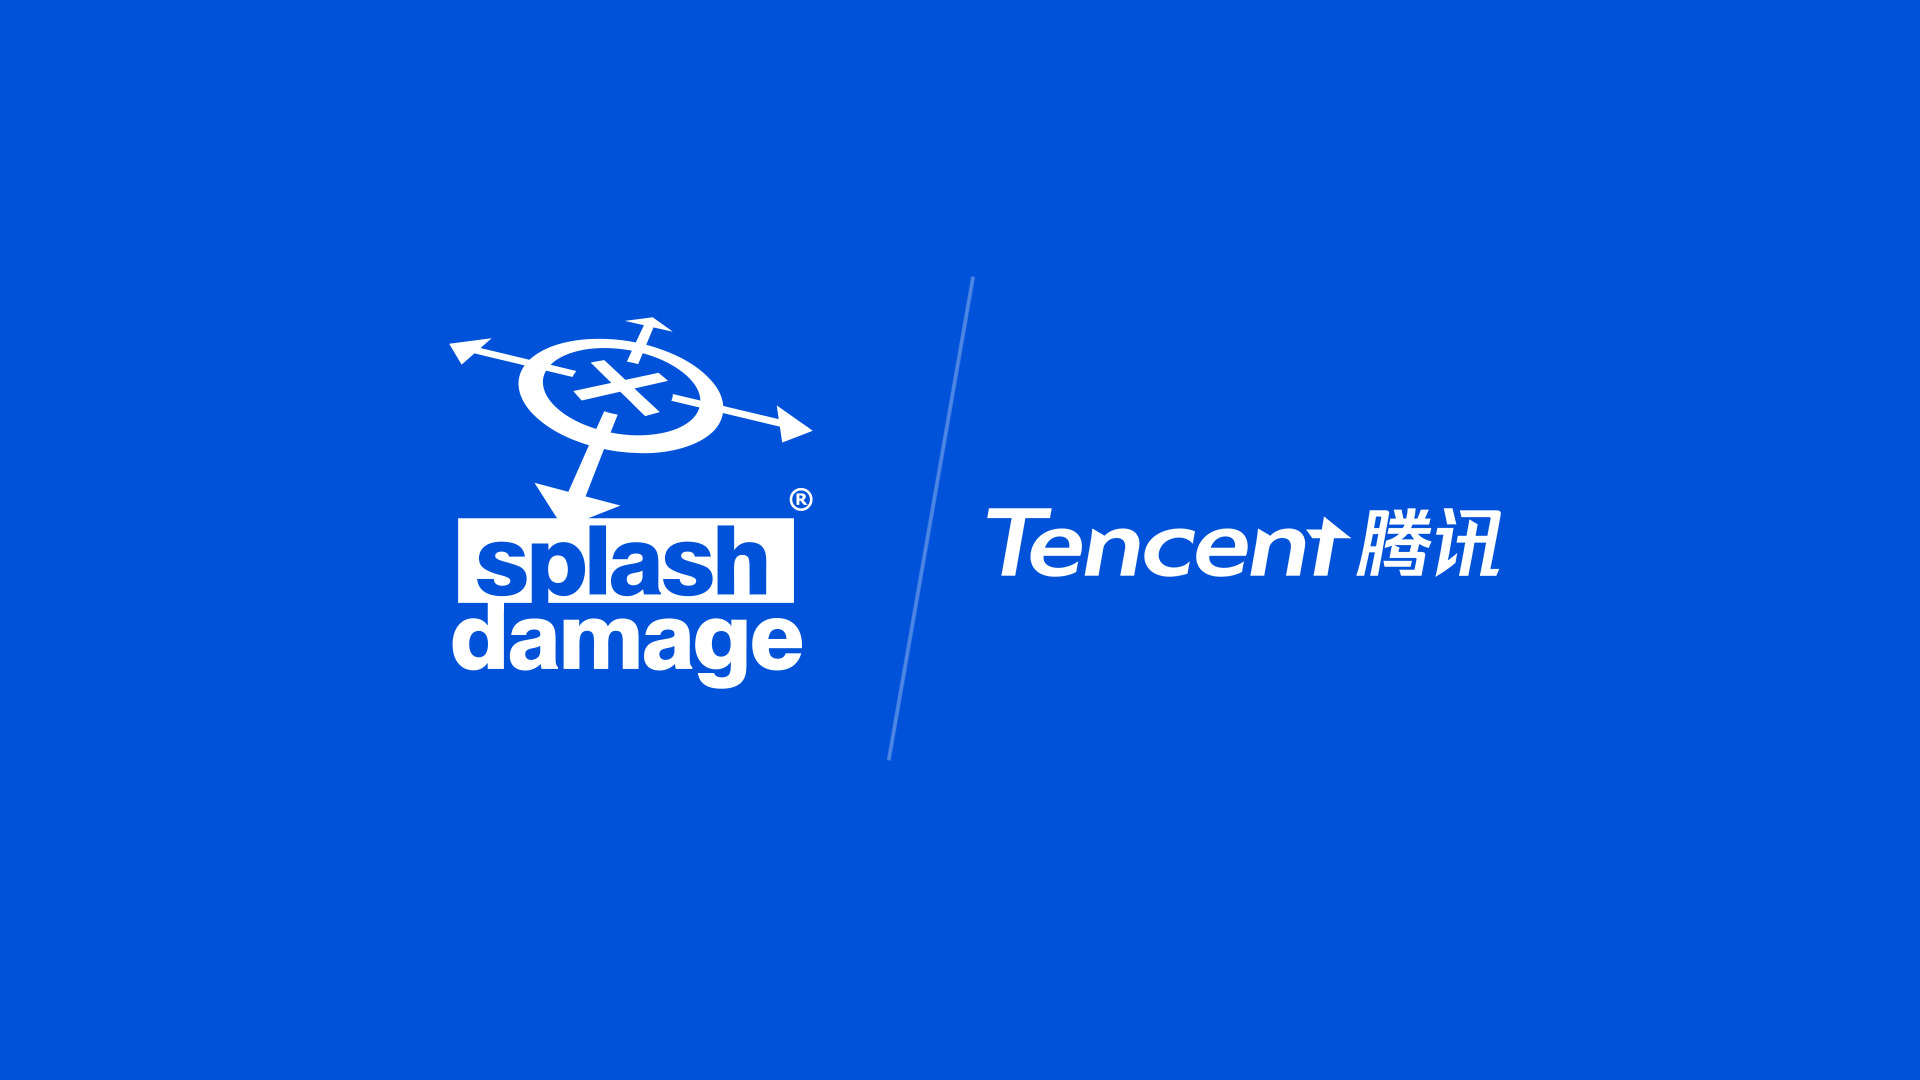 Splash Damage joins the Tencent family